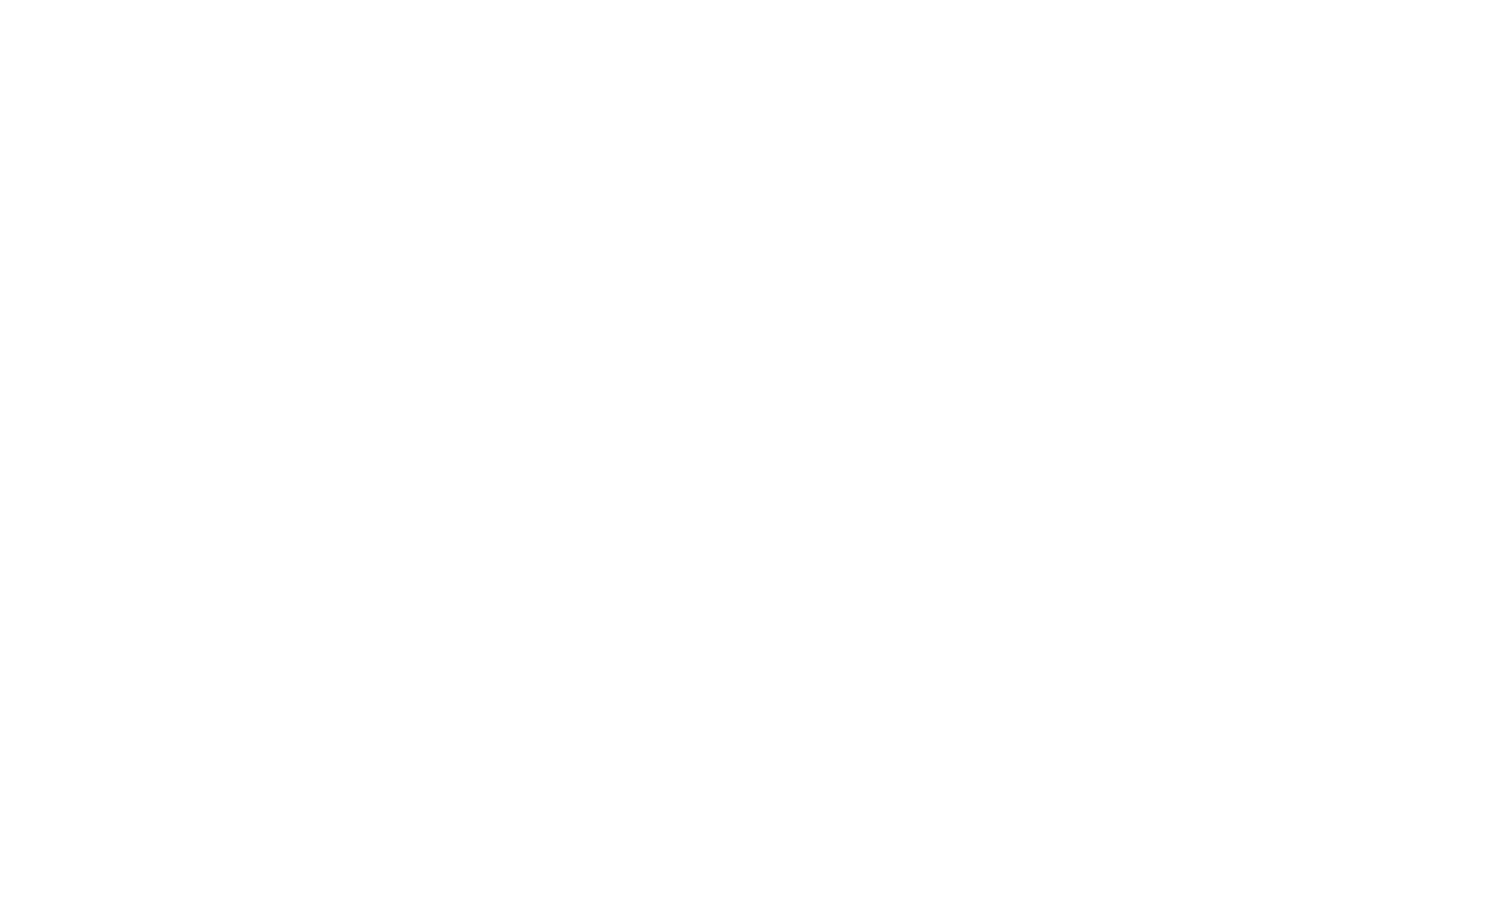 CRB Design, LLC